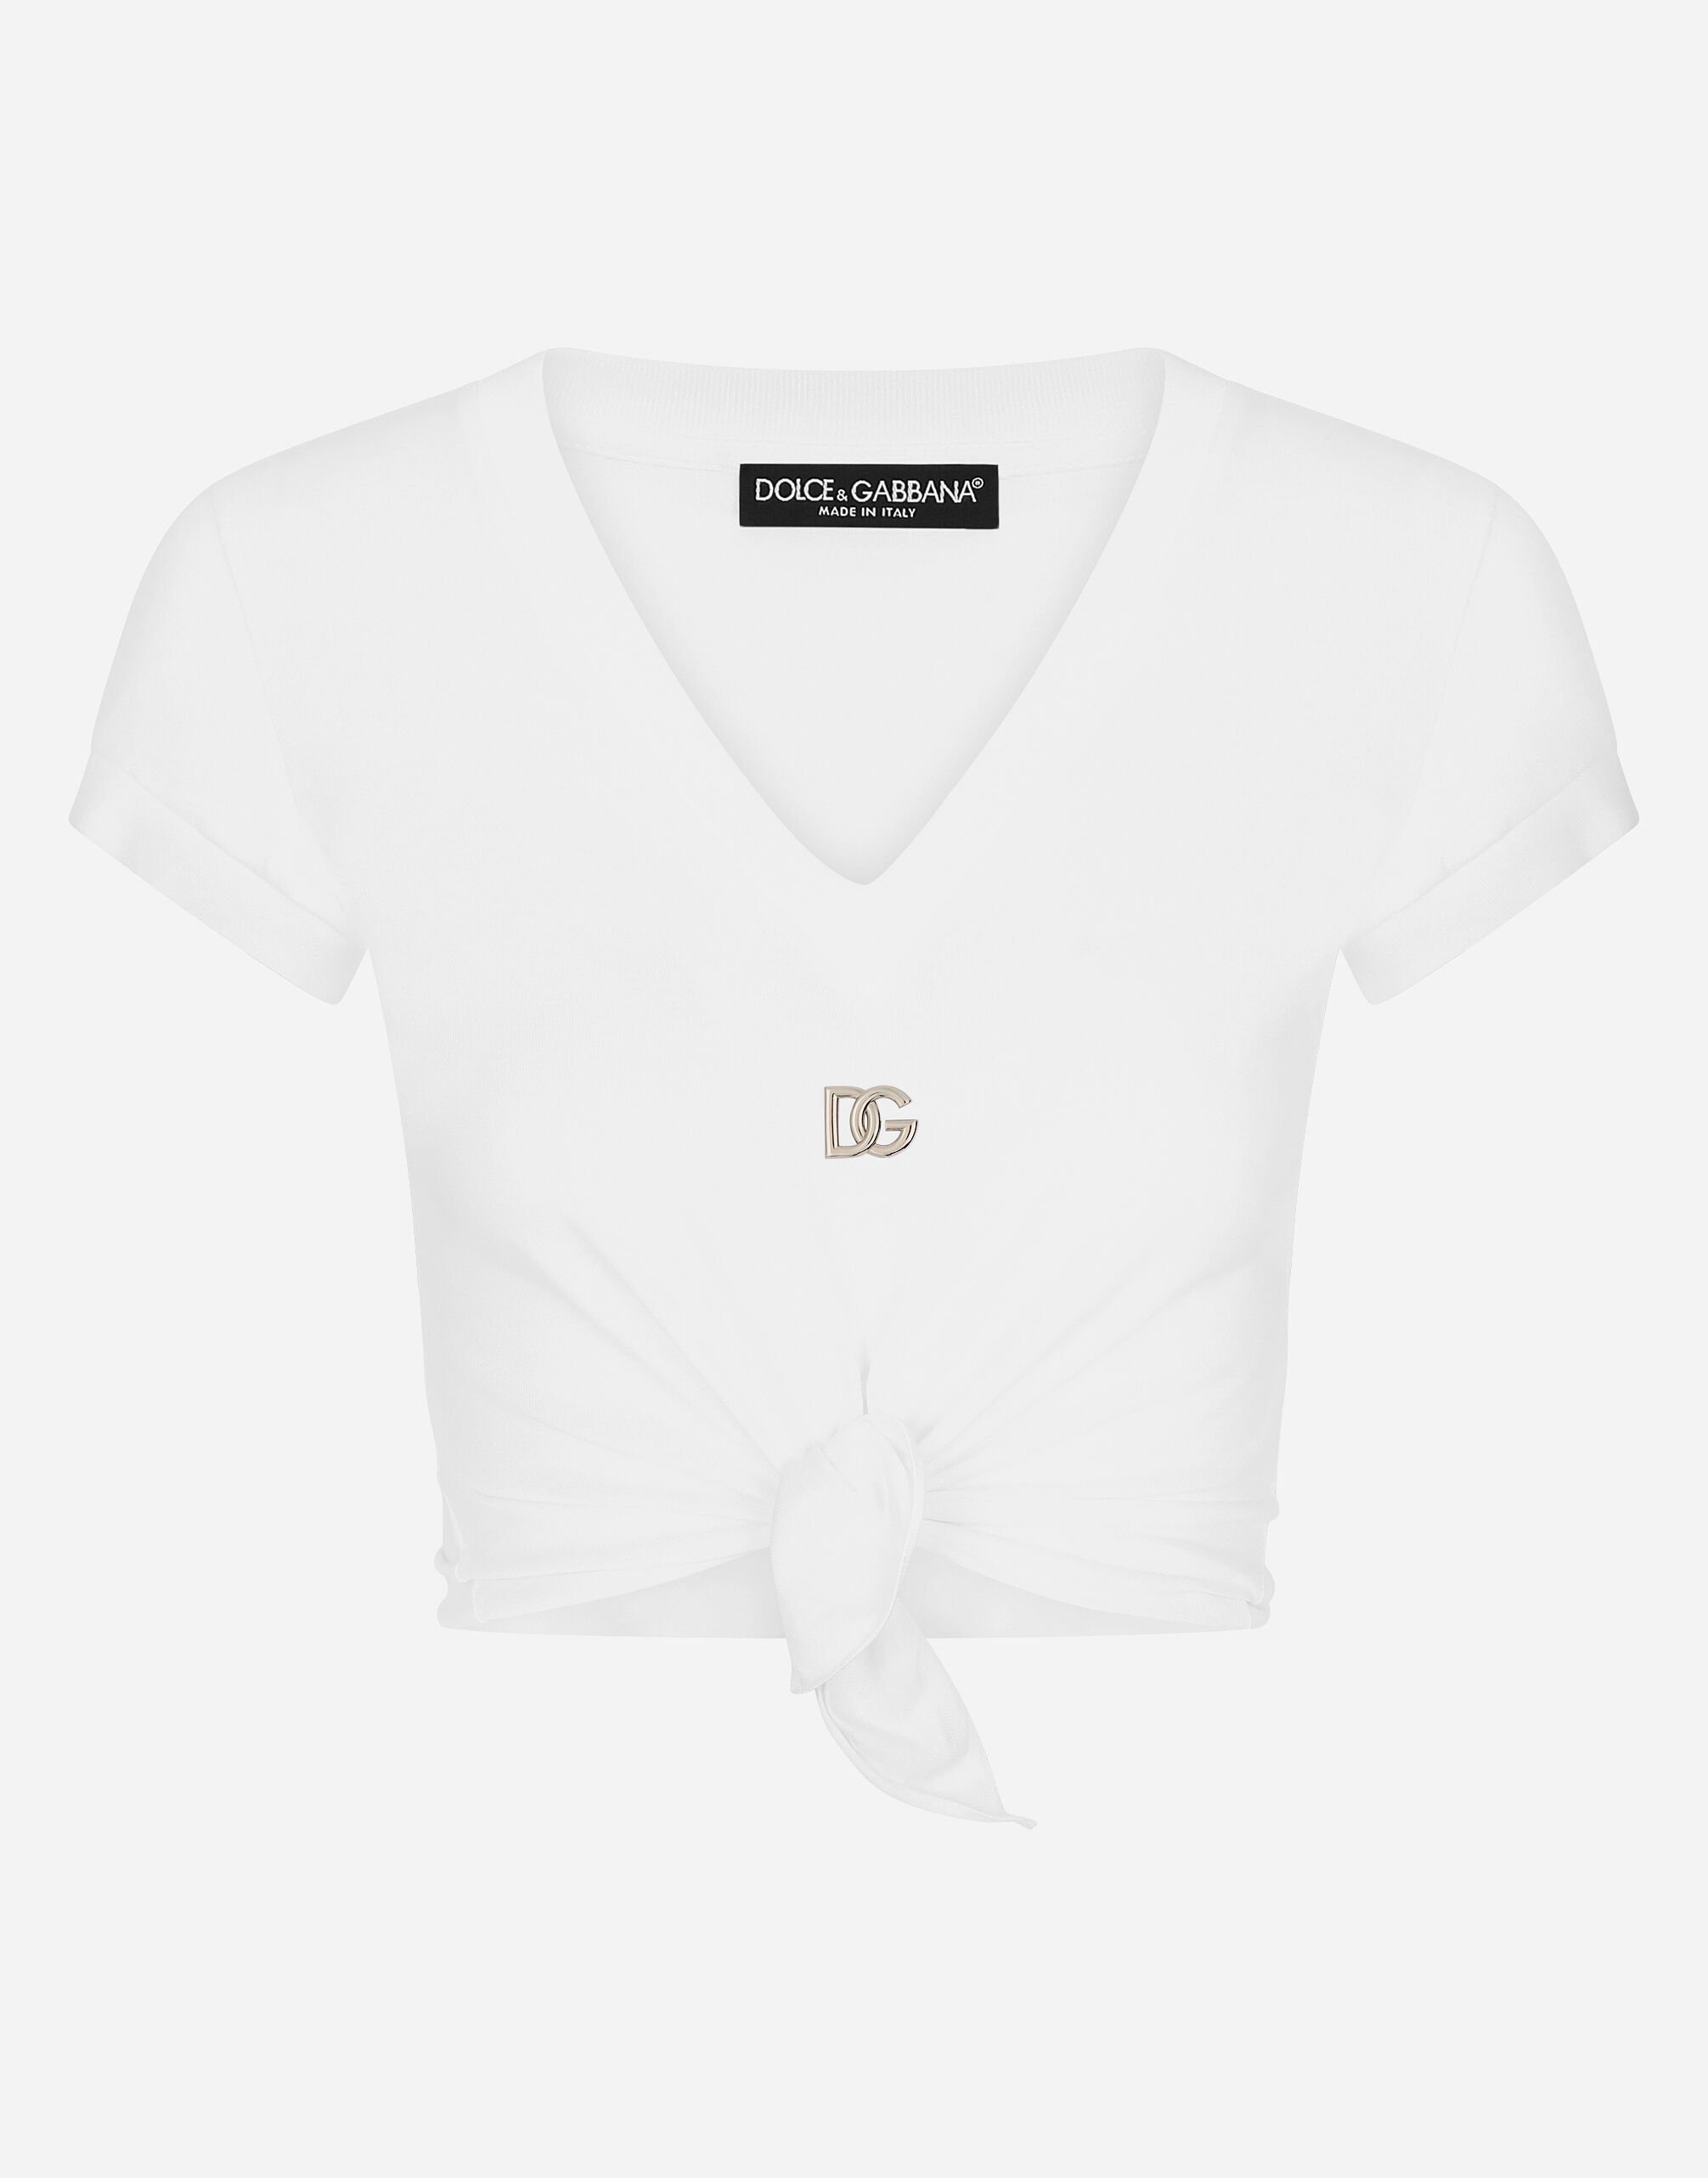 Dolce & Gabbana Jersey T-shirt with DG logo and knot detail Denim BB6498AO621